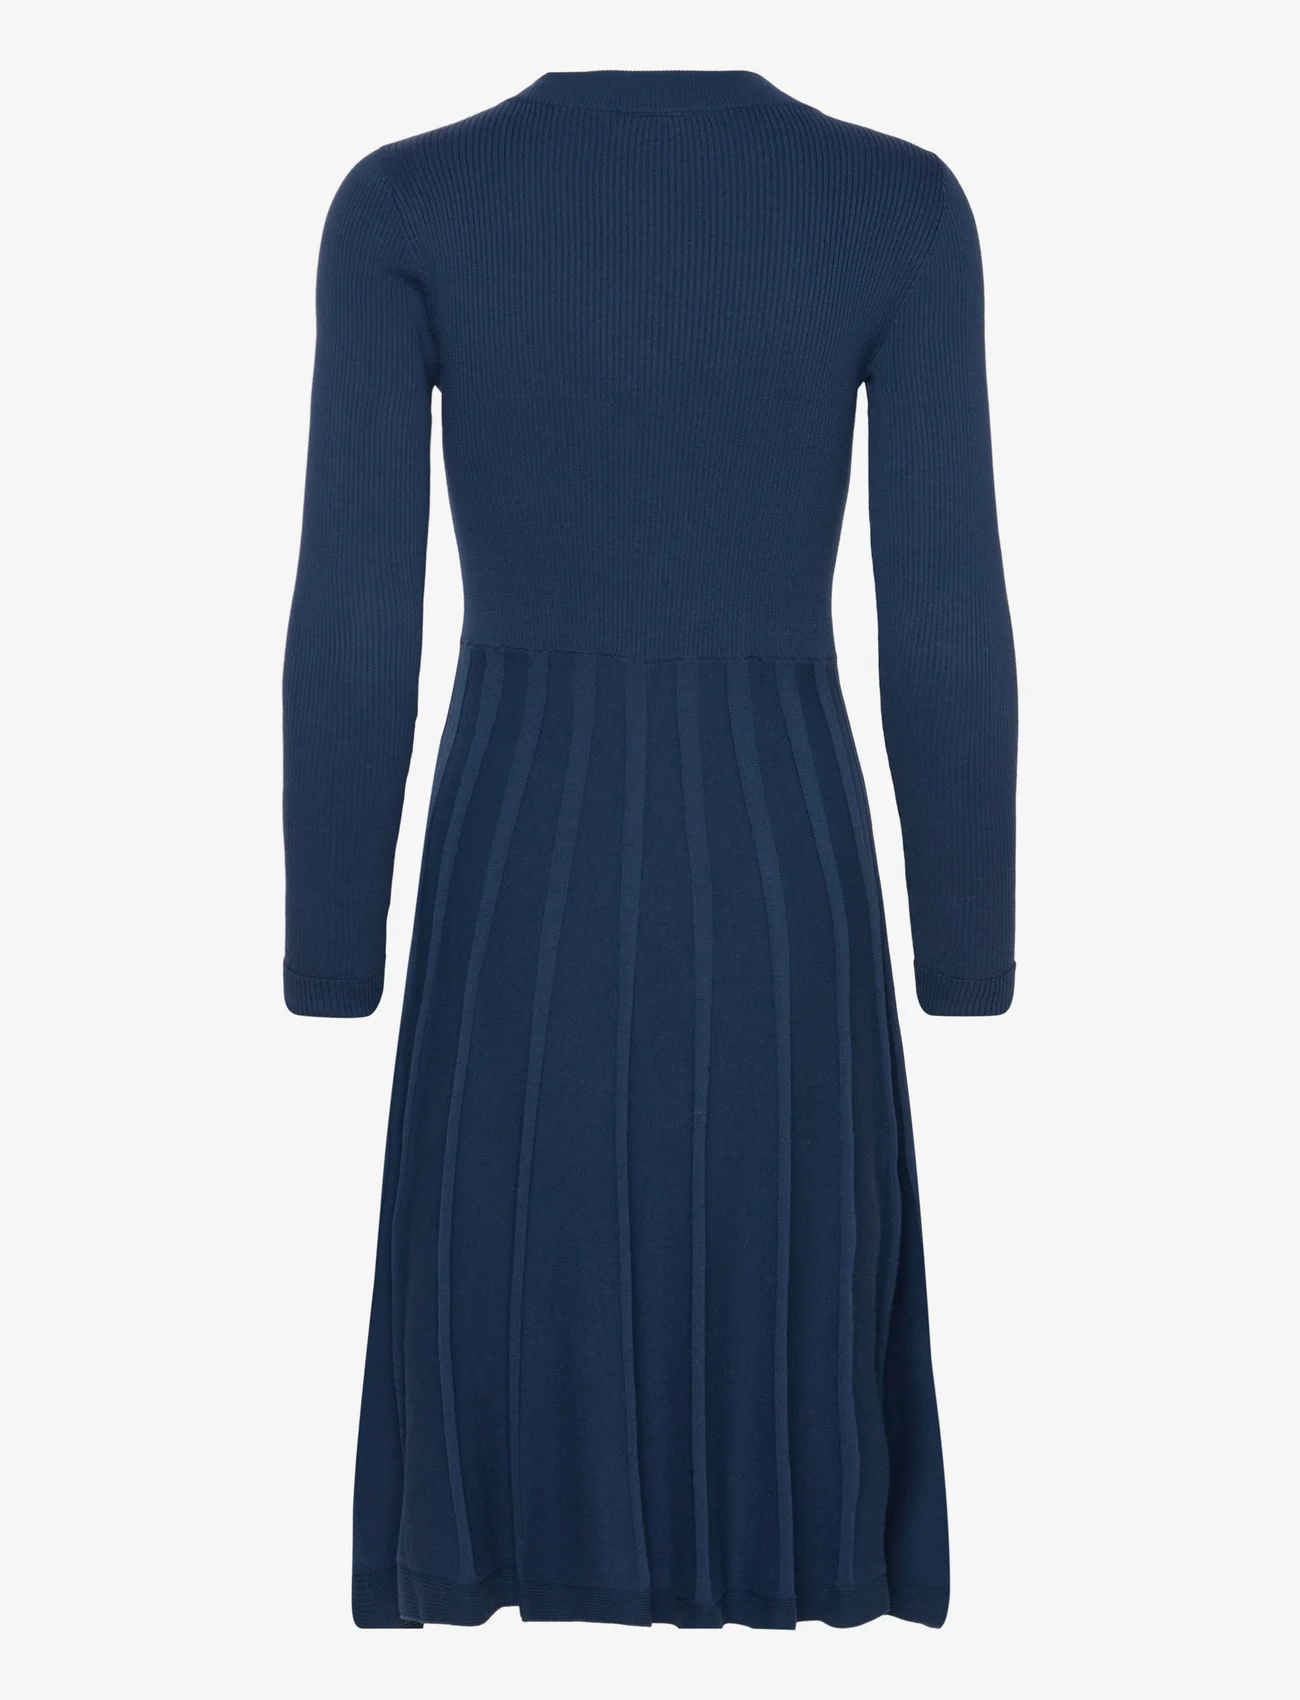 Jumperfabriken - Henna dress Dark Blue - knitted dresses - darkblue - 1